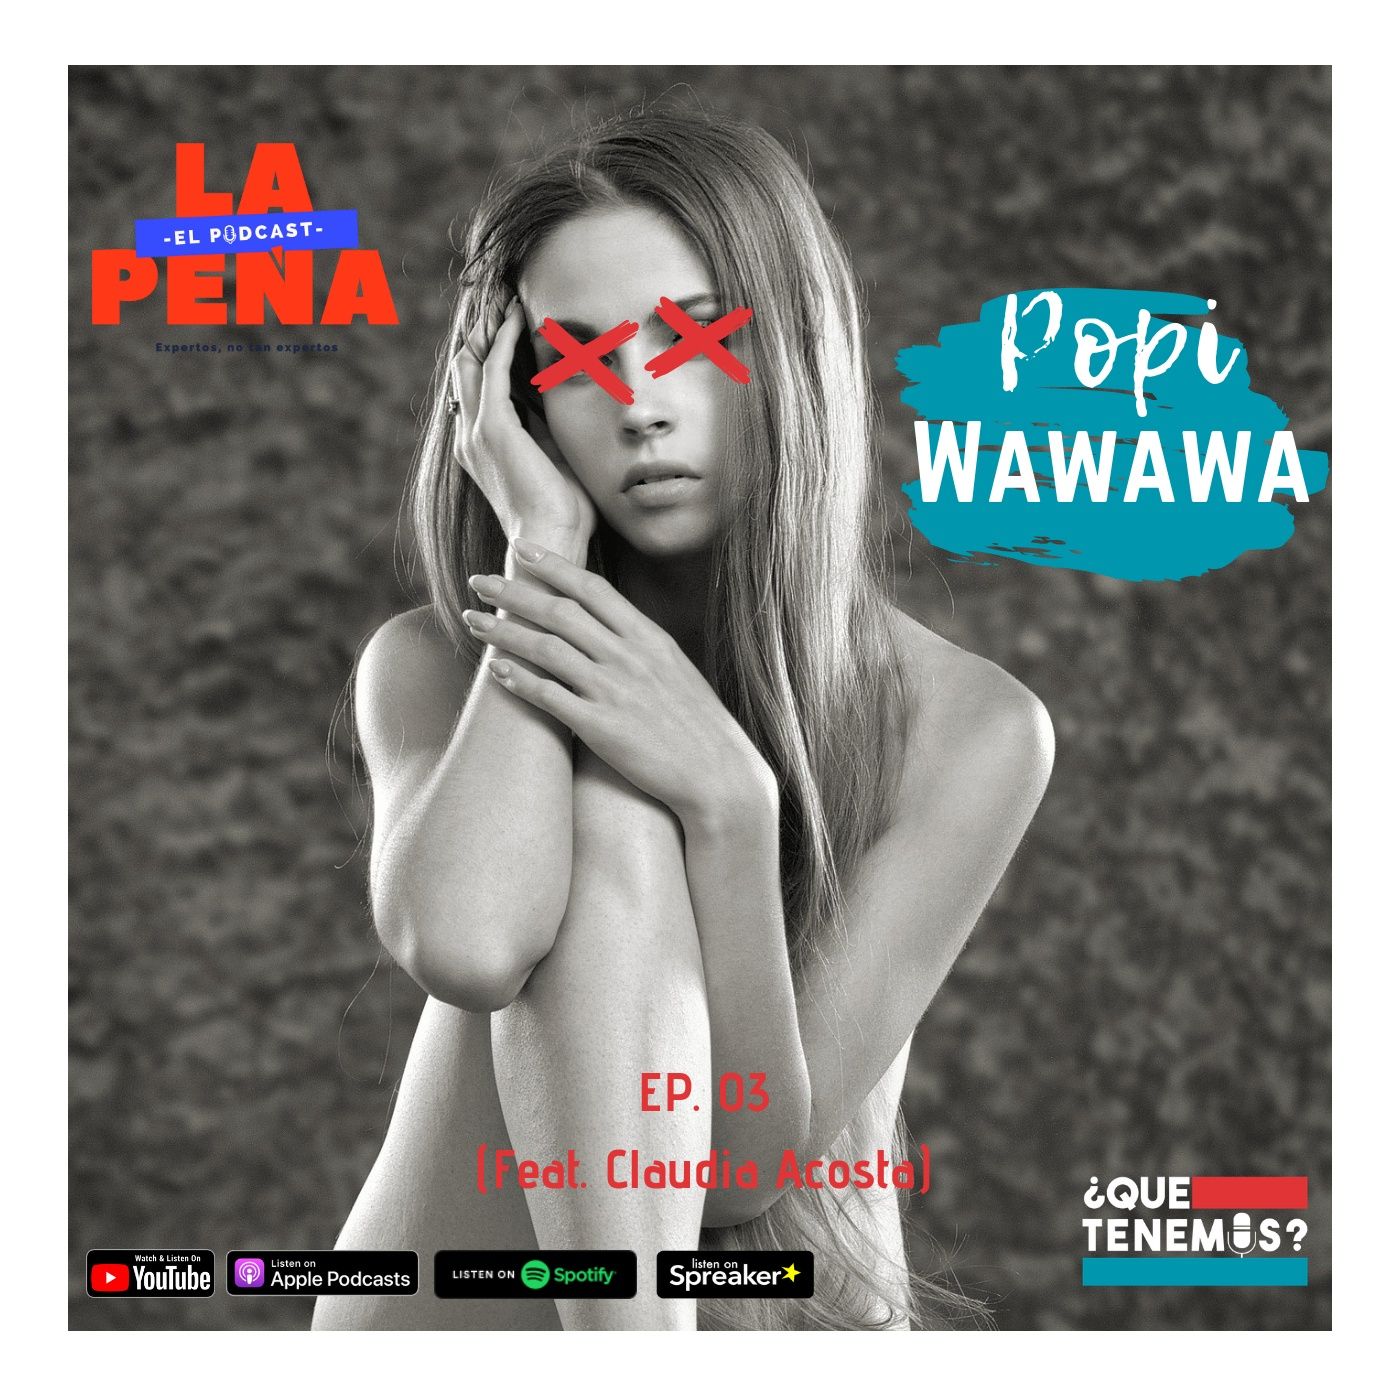 EP#03 - ¿Popi o Wawawa? (Feat. Claudia Acosta)